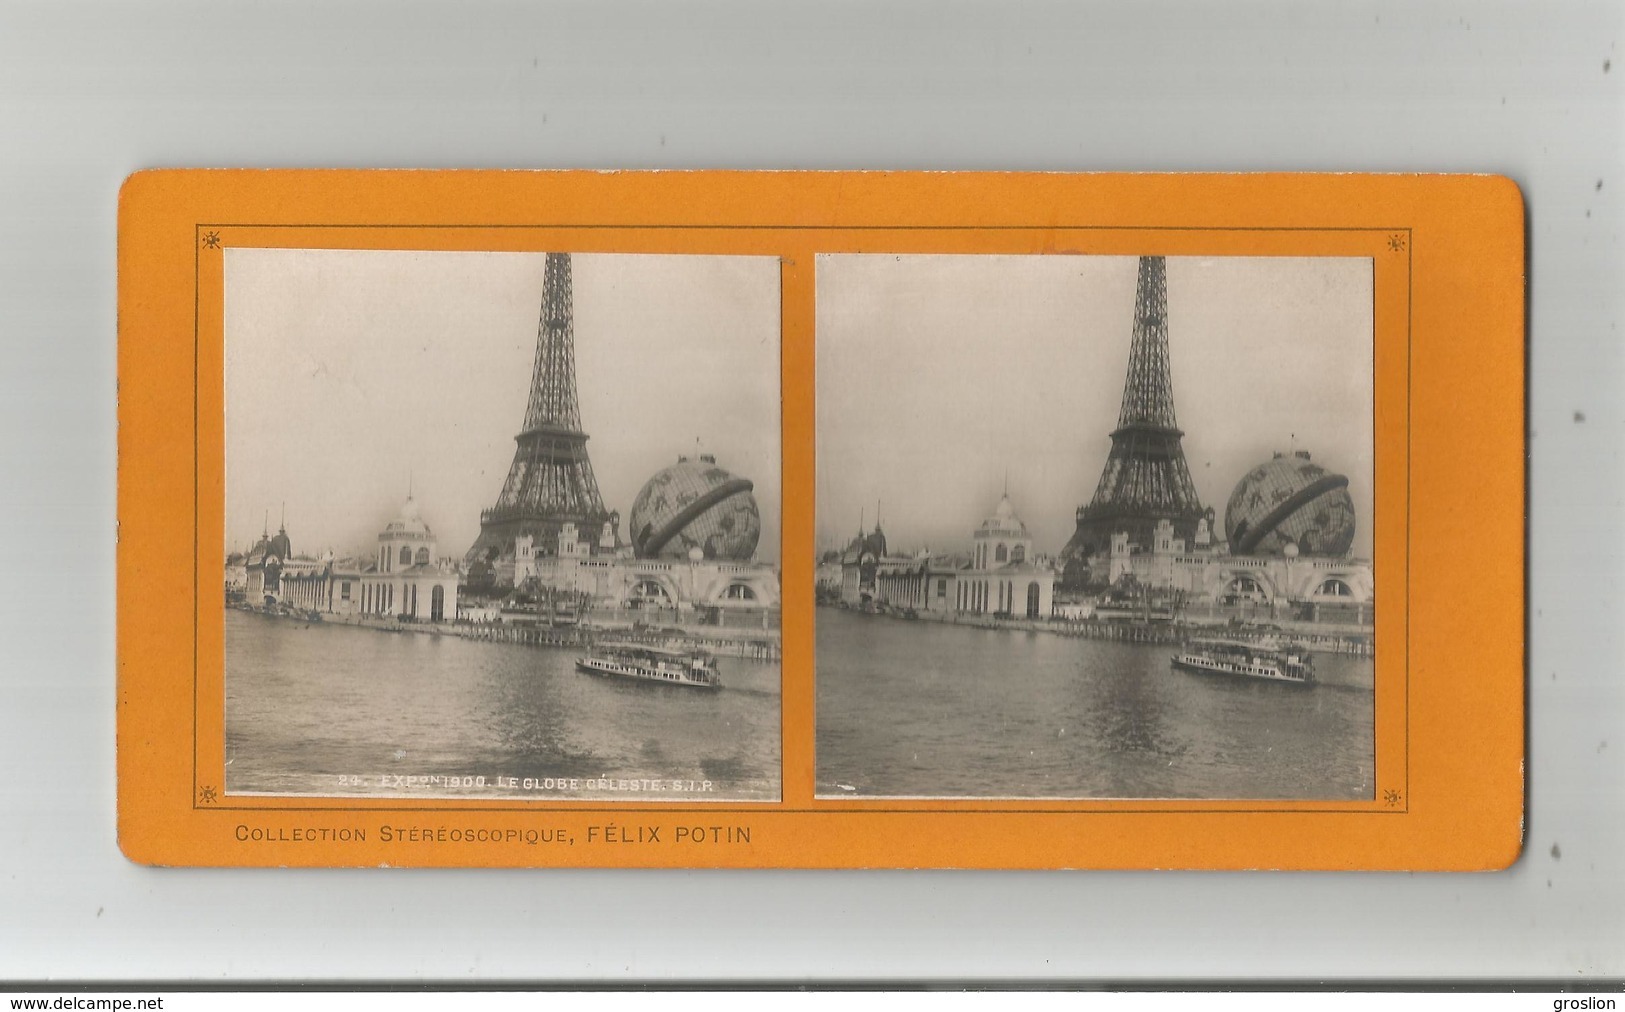 PARIS (75) 24 EXPO 1900 PHOTO STEREOSCOPIQUE LE GLOBE CELESTE ET LA TOUR EIFFEL COLLECTION FELIX POTIN - Stereoscopic